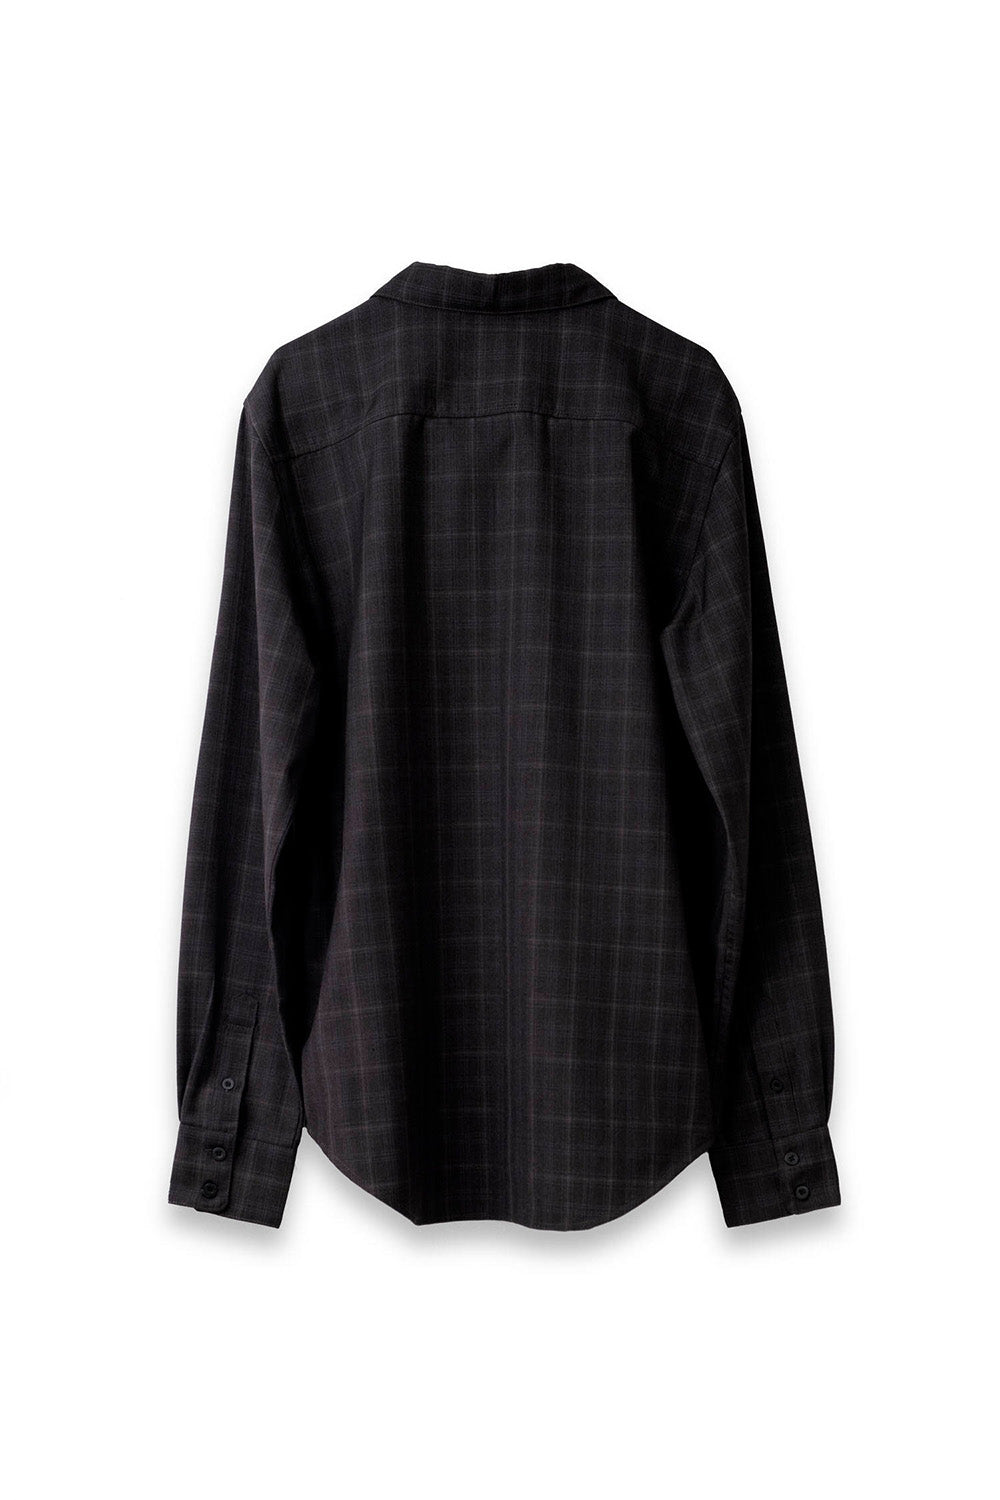 SEANNUNG - MEN - Plaid Long Sleeve Fit Shirt 窄版格紋長袖襯衫